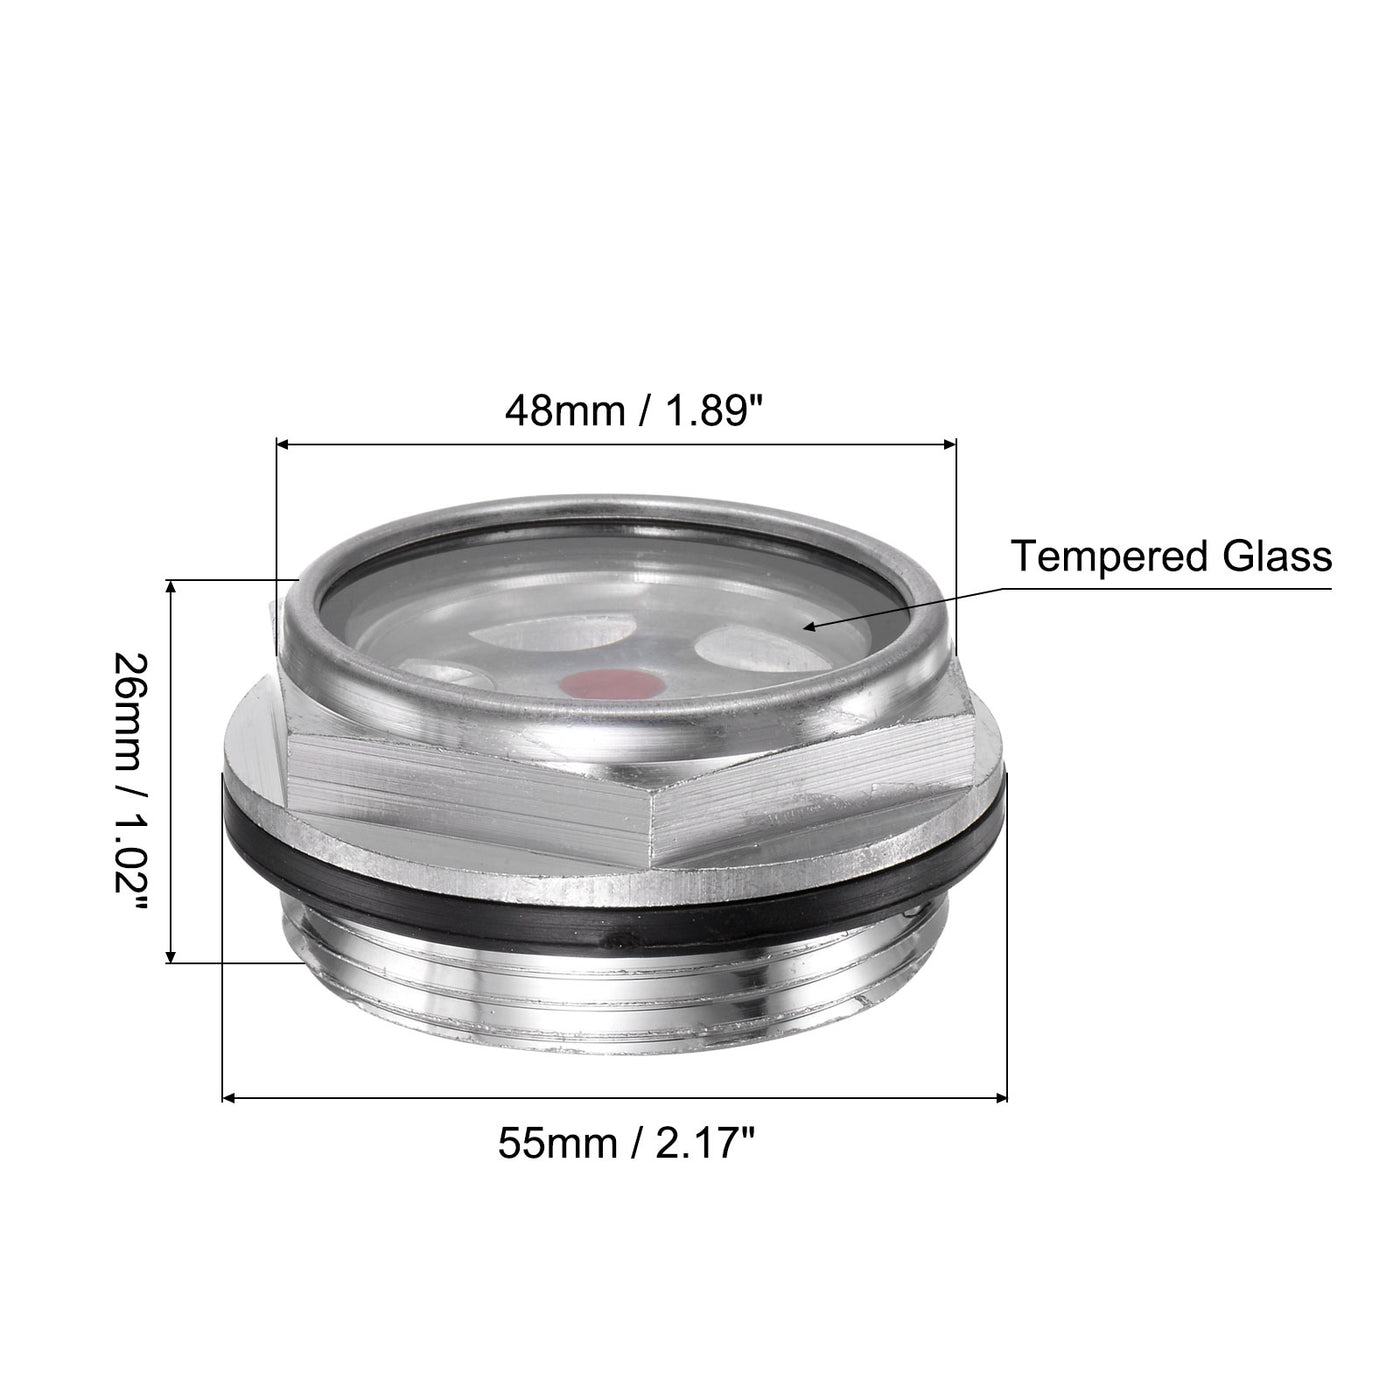 Uxcell Uxcell Air Compressor Oil Level Gauge Sight Glass G1-1/2 Male Thread Aluminum